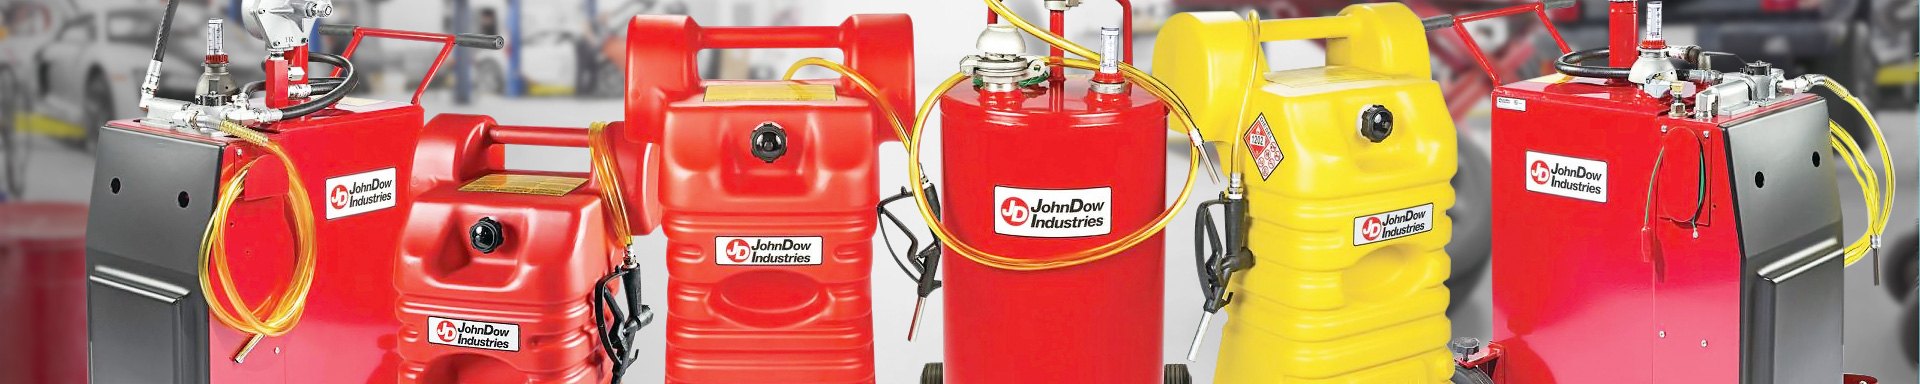 JohnDow Industries™  Gas Caddies, Fuel Tanks, Tools & Equipment